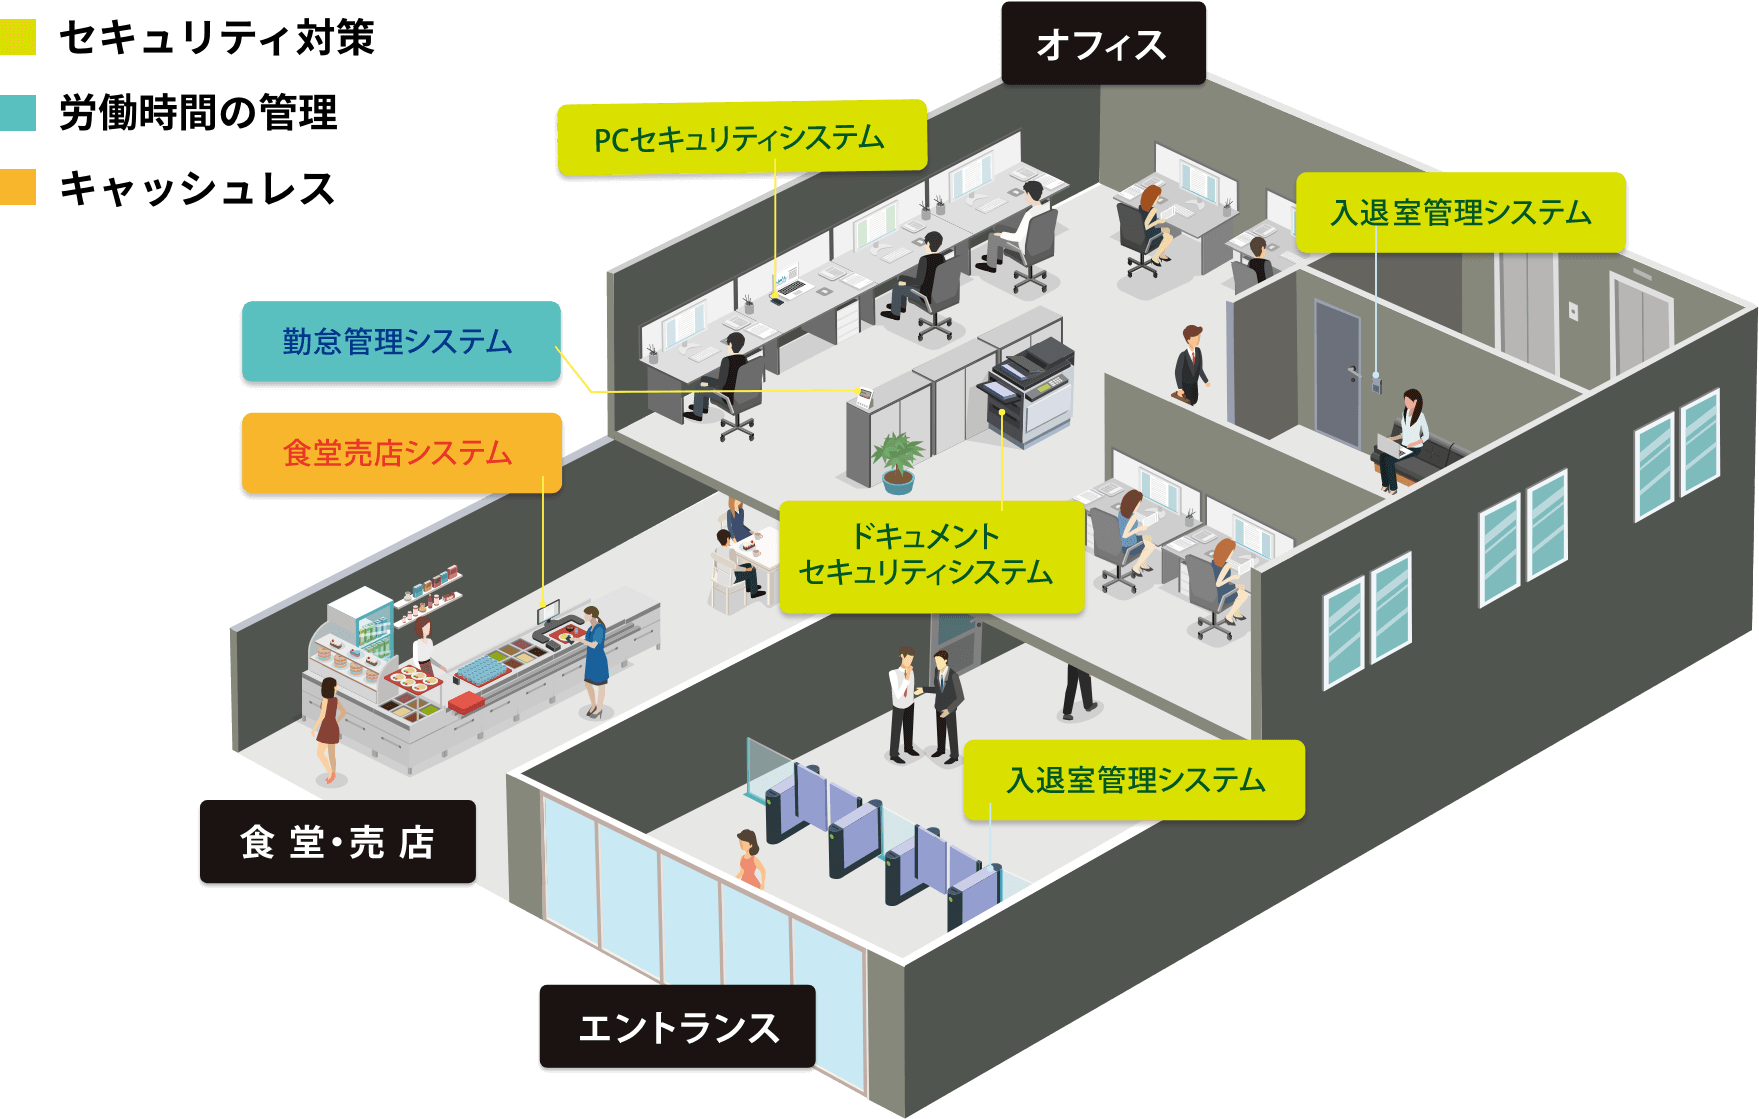 ICカード関連システムにより、セキュリティ対策、労働時間の管理、キャッシュレス対応を実現しているオフィス・食堂・売店のイメージ図